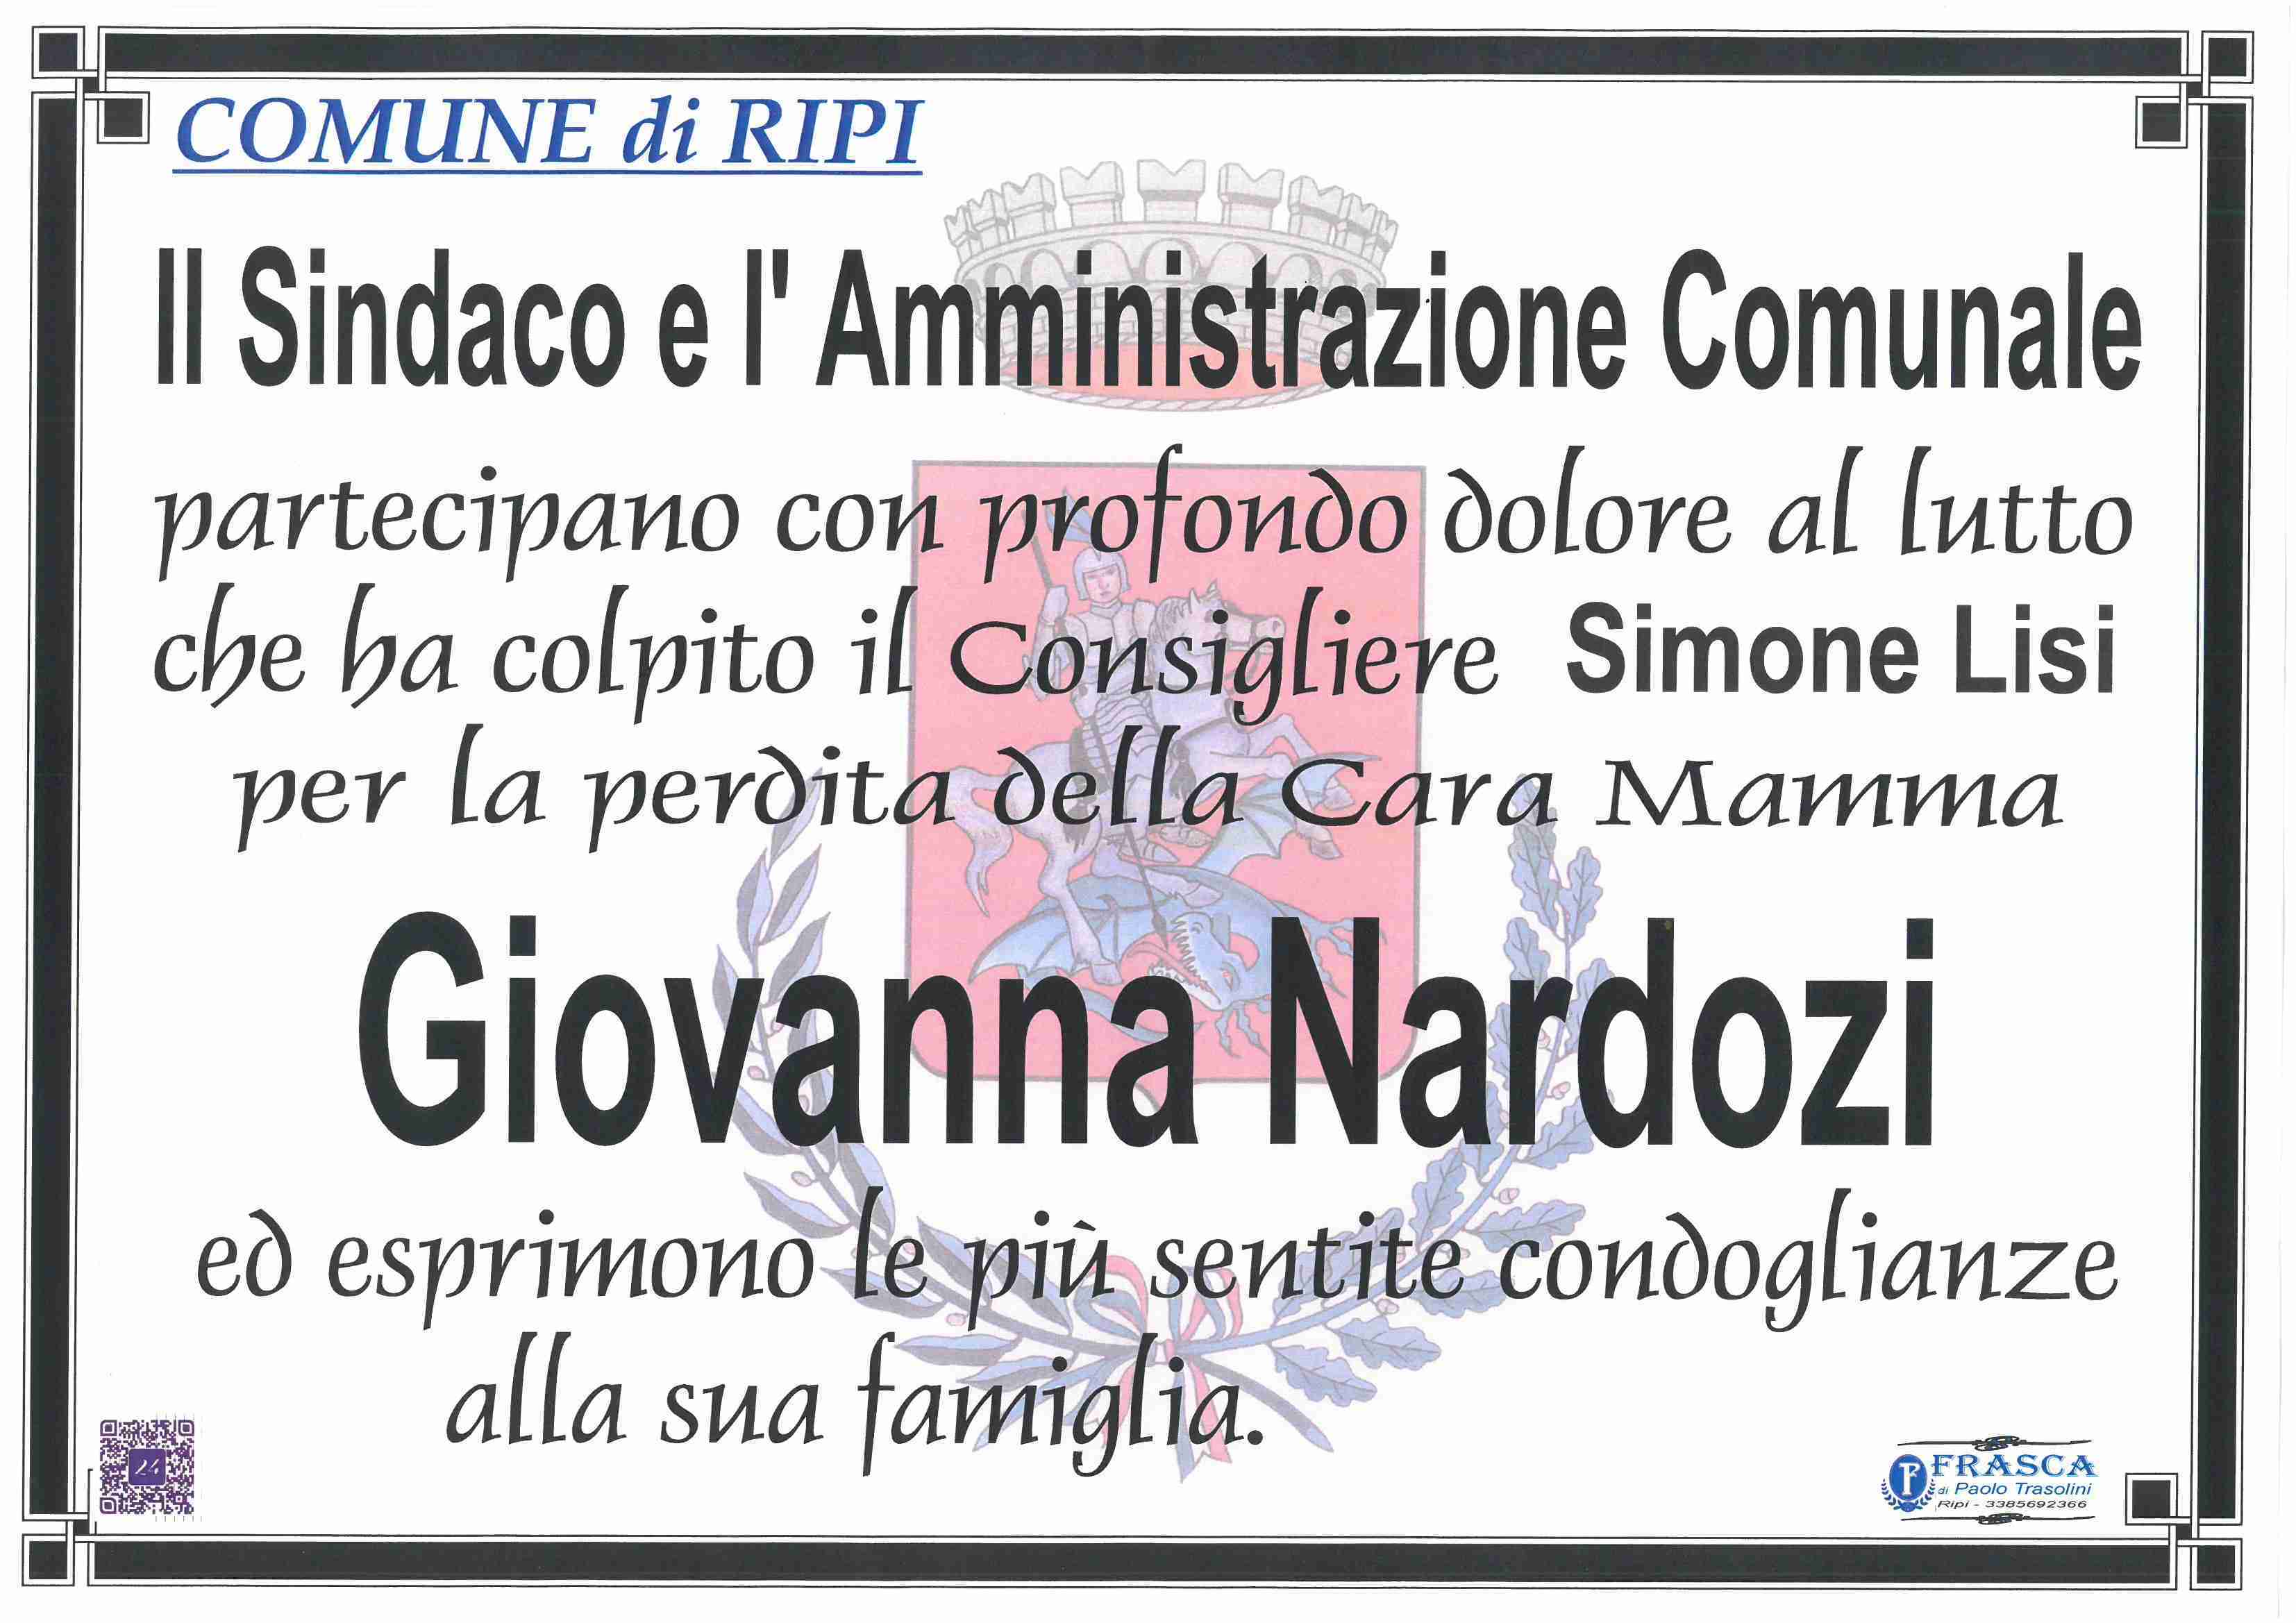 Giovanna Nardozi